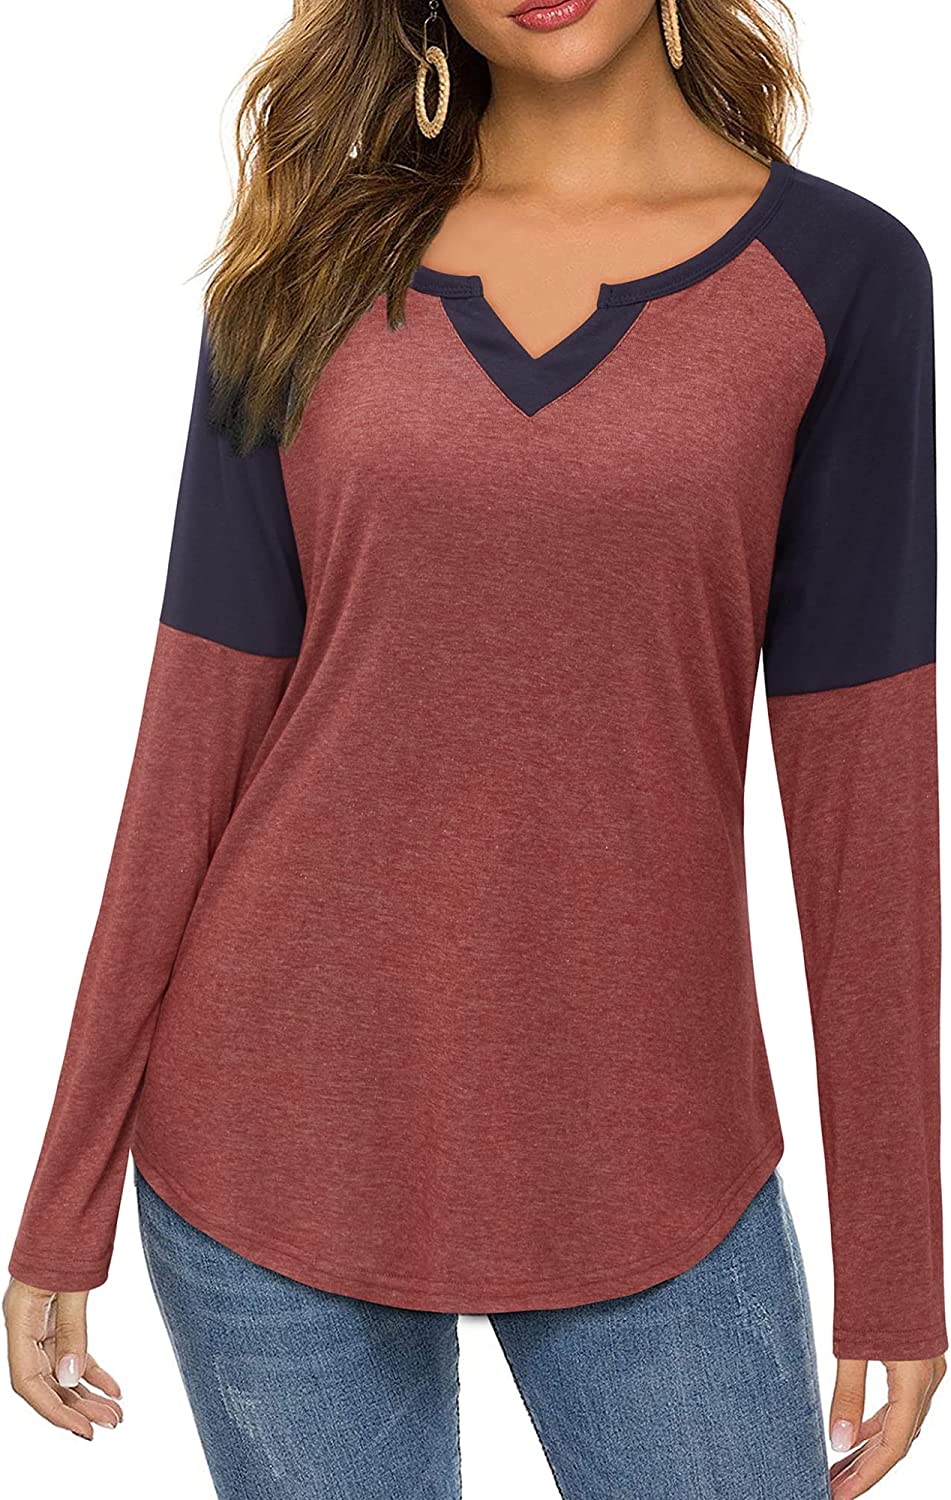 LAISHEN Women's Raglan Long Sleeve T-Shirt Color Block Henley V